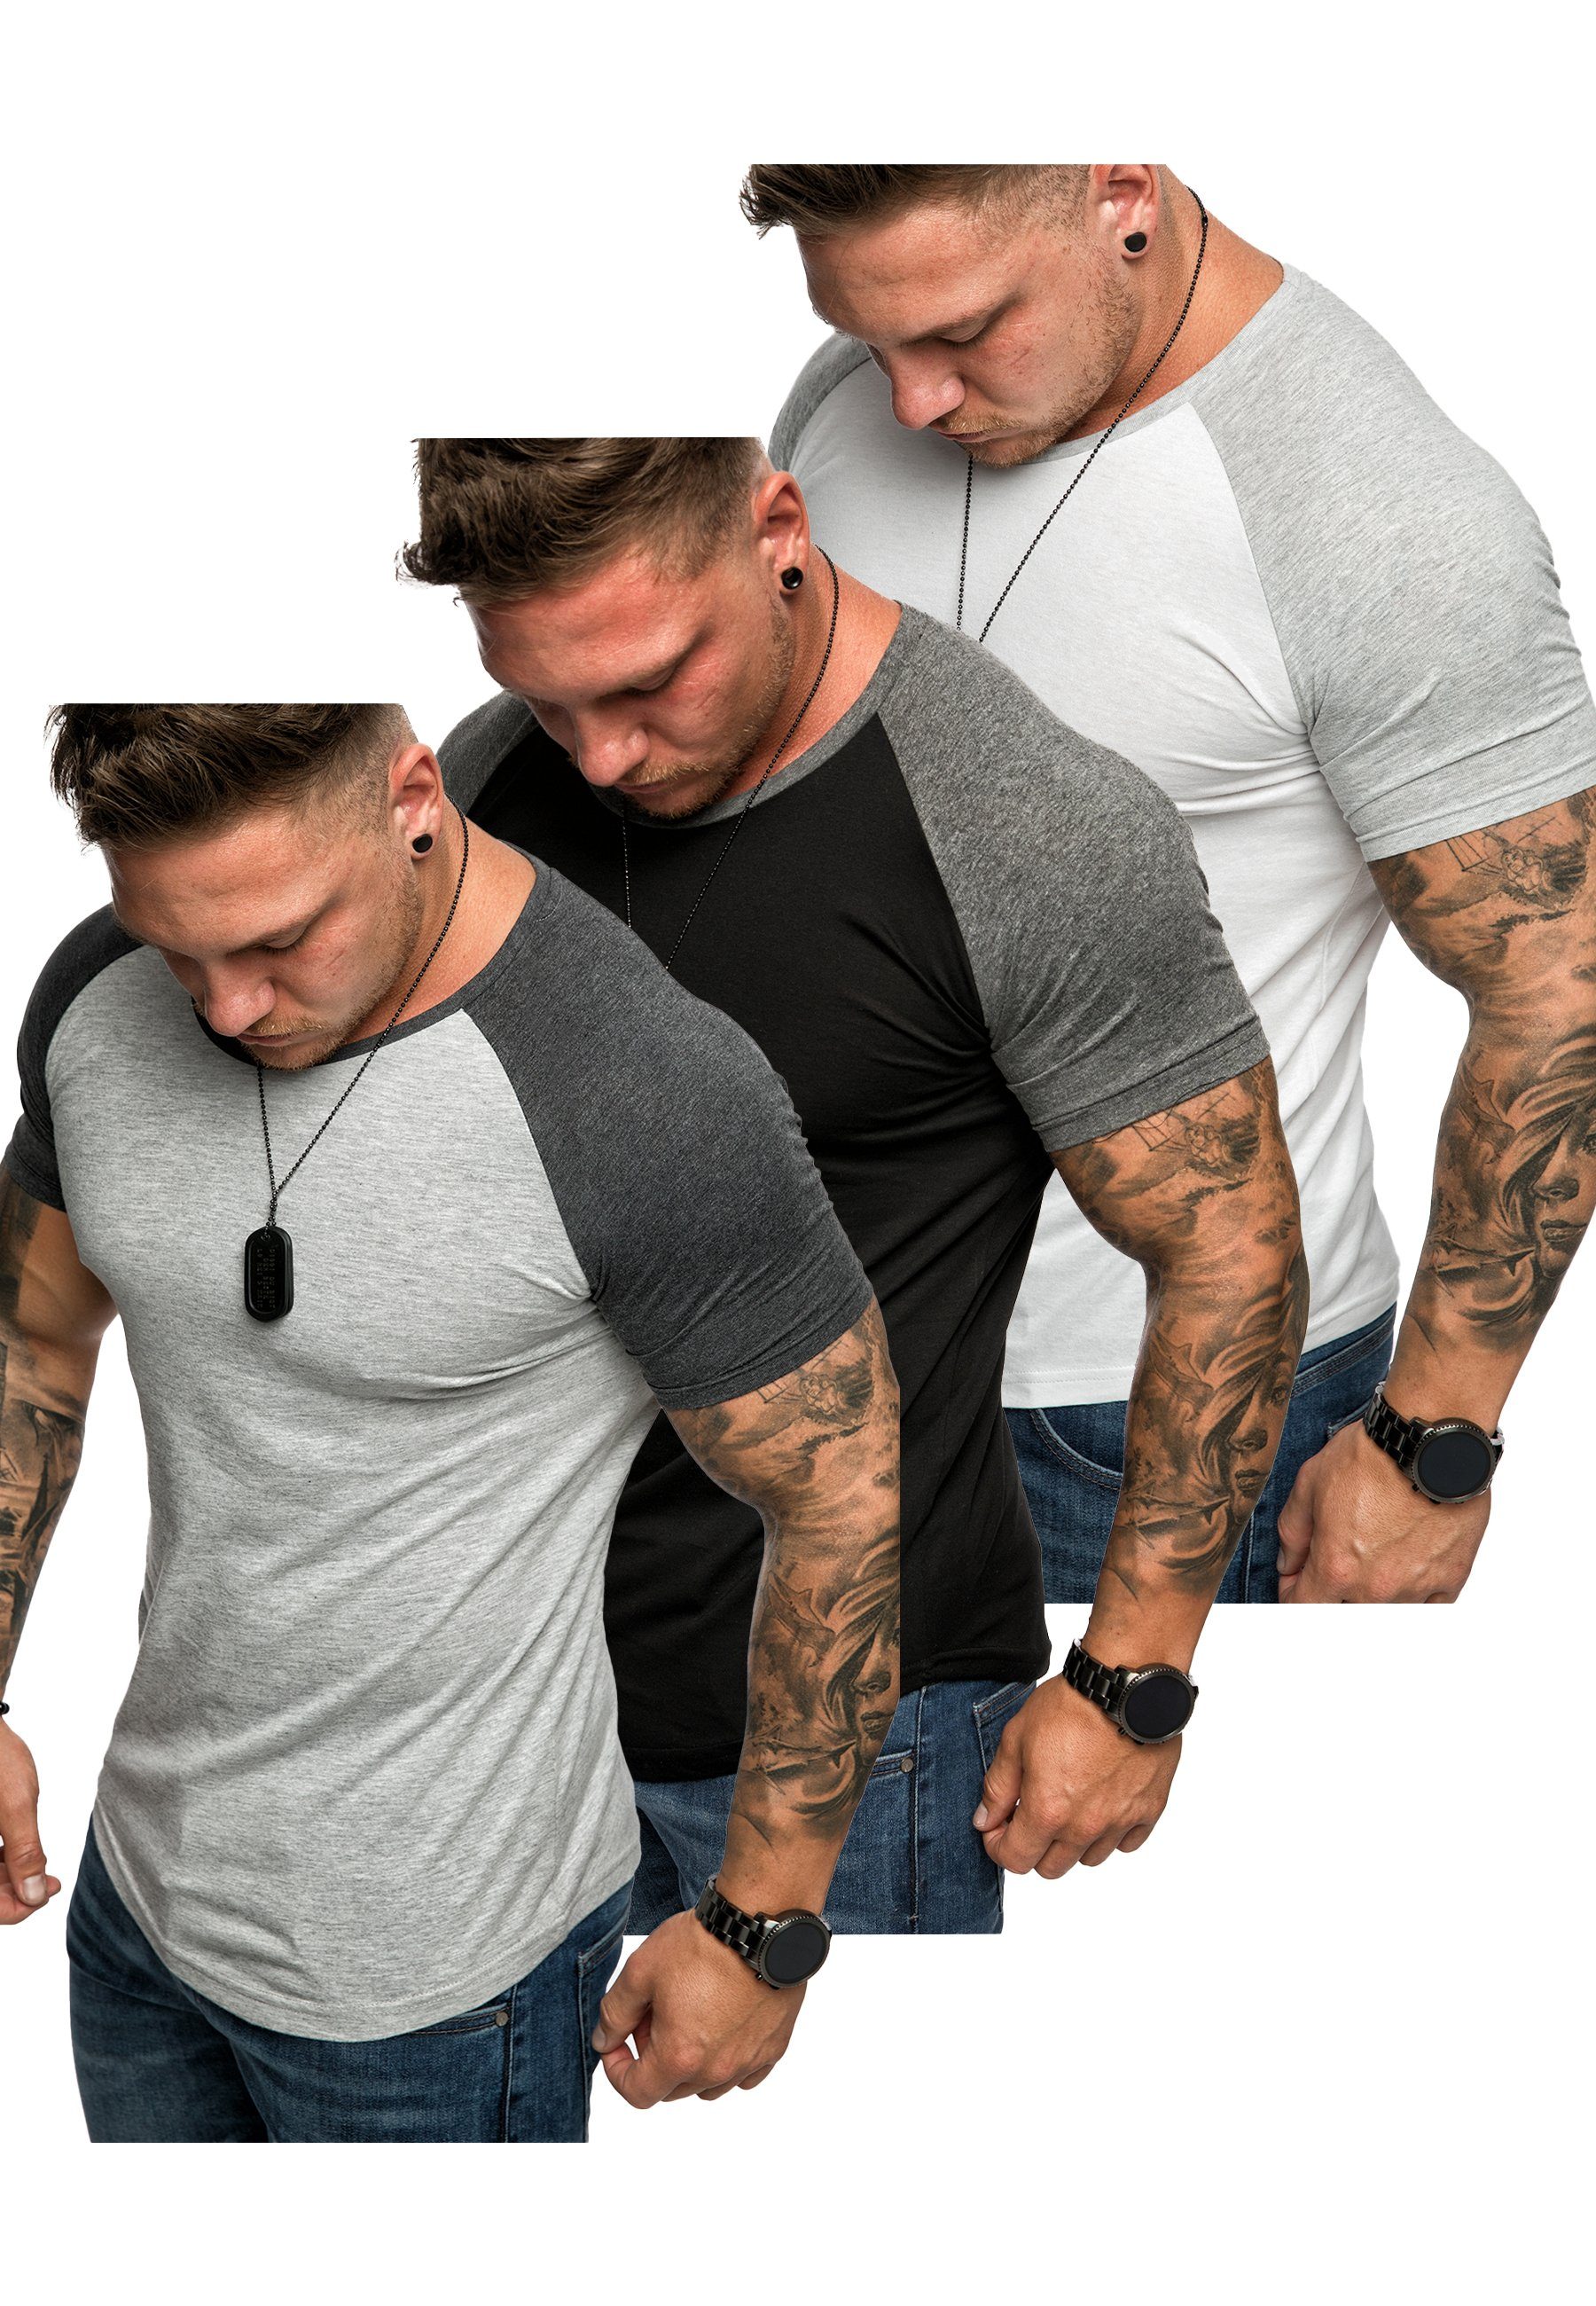 3er-Pack T-Shirt T-Shirt 3. Herren Raglan + Weiß/Grau) Oversize Kontrast OMAHA (Grau/Anthrazit + (3er-Pack) T-Shirts Amaci&Sons Schwarz/Anthrazit Basic